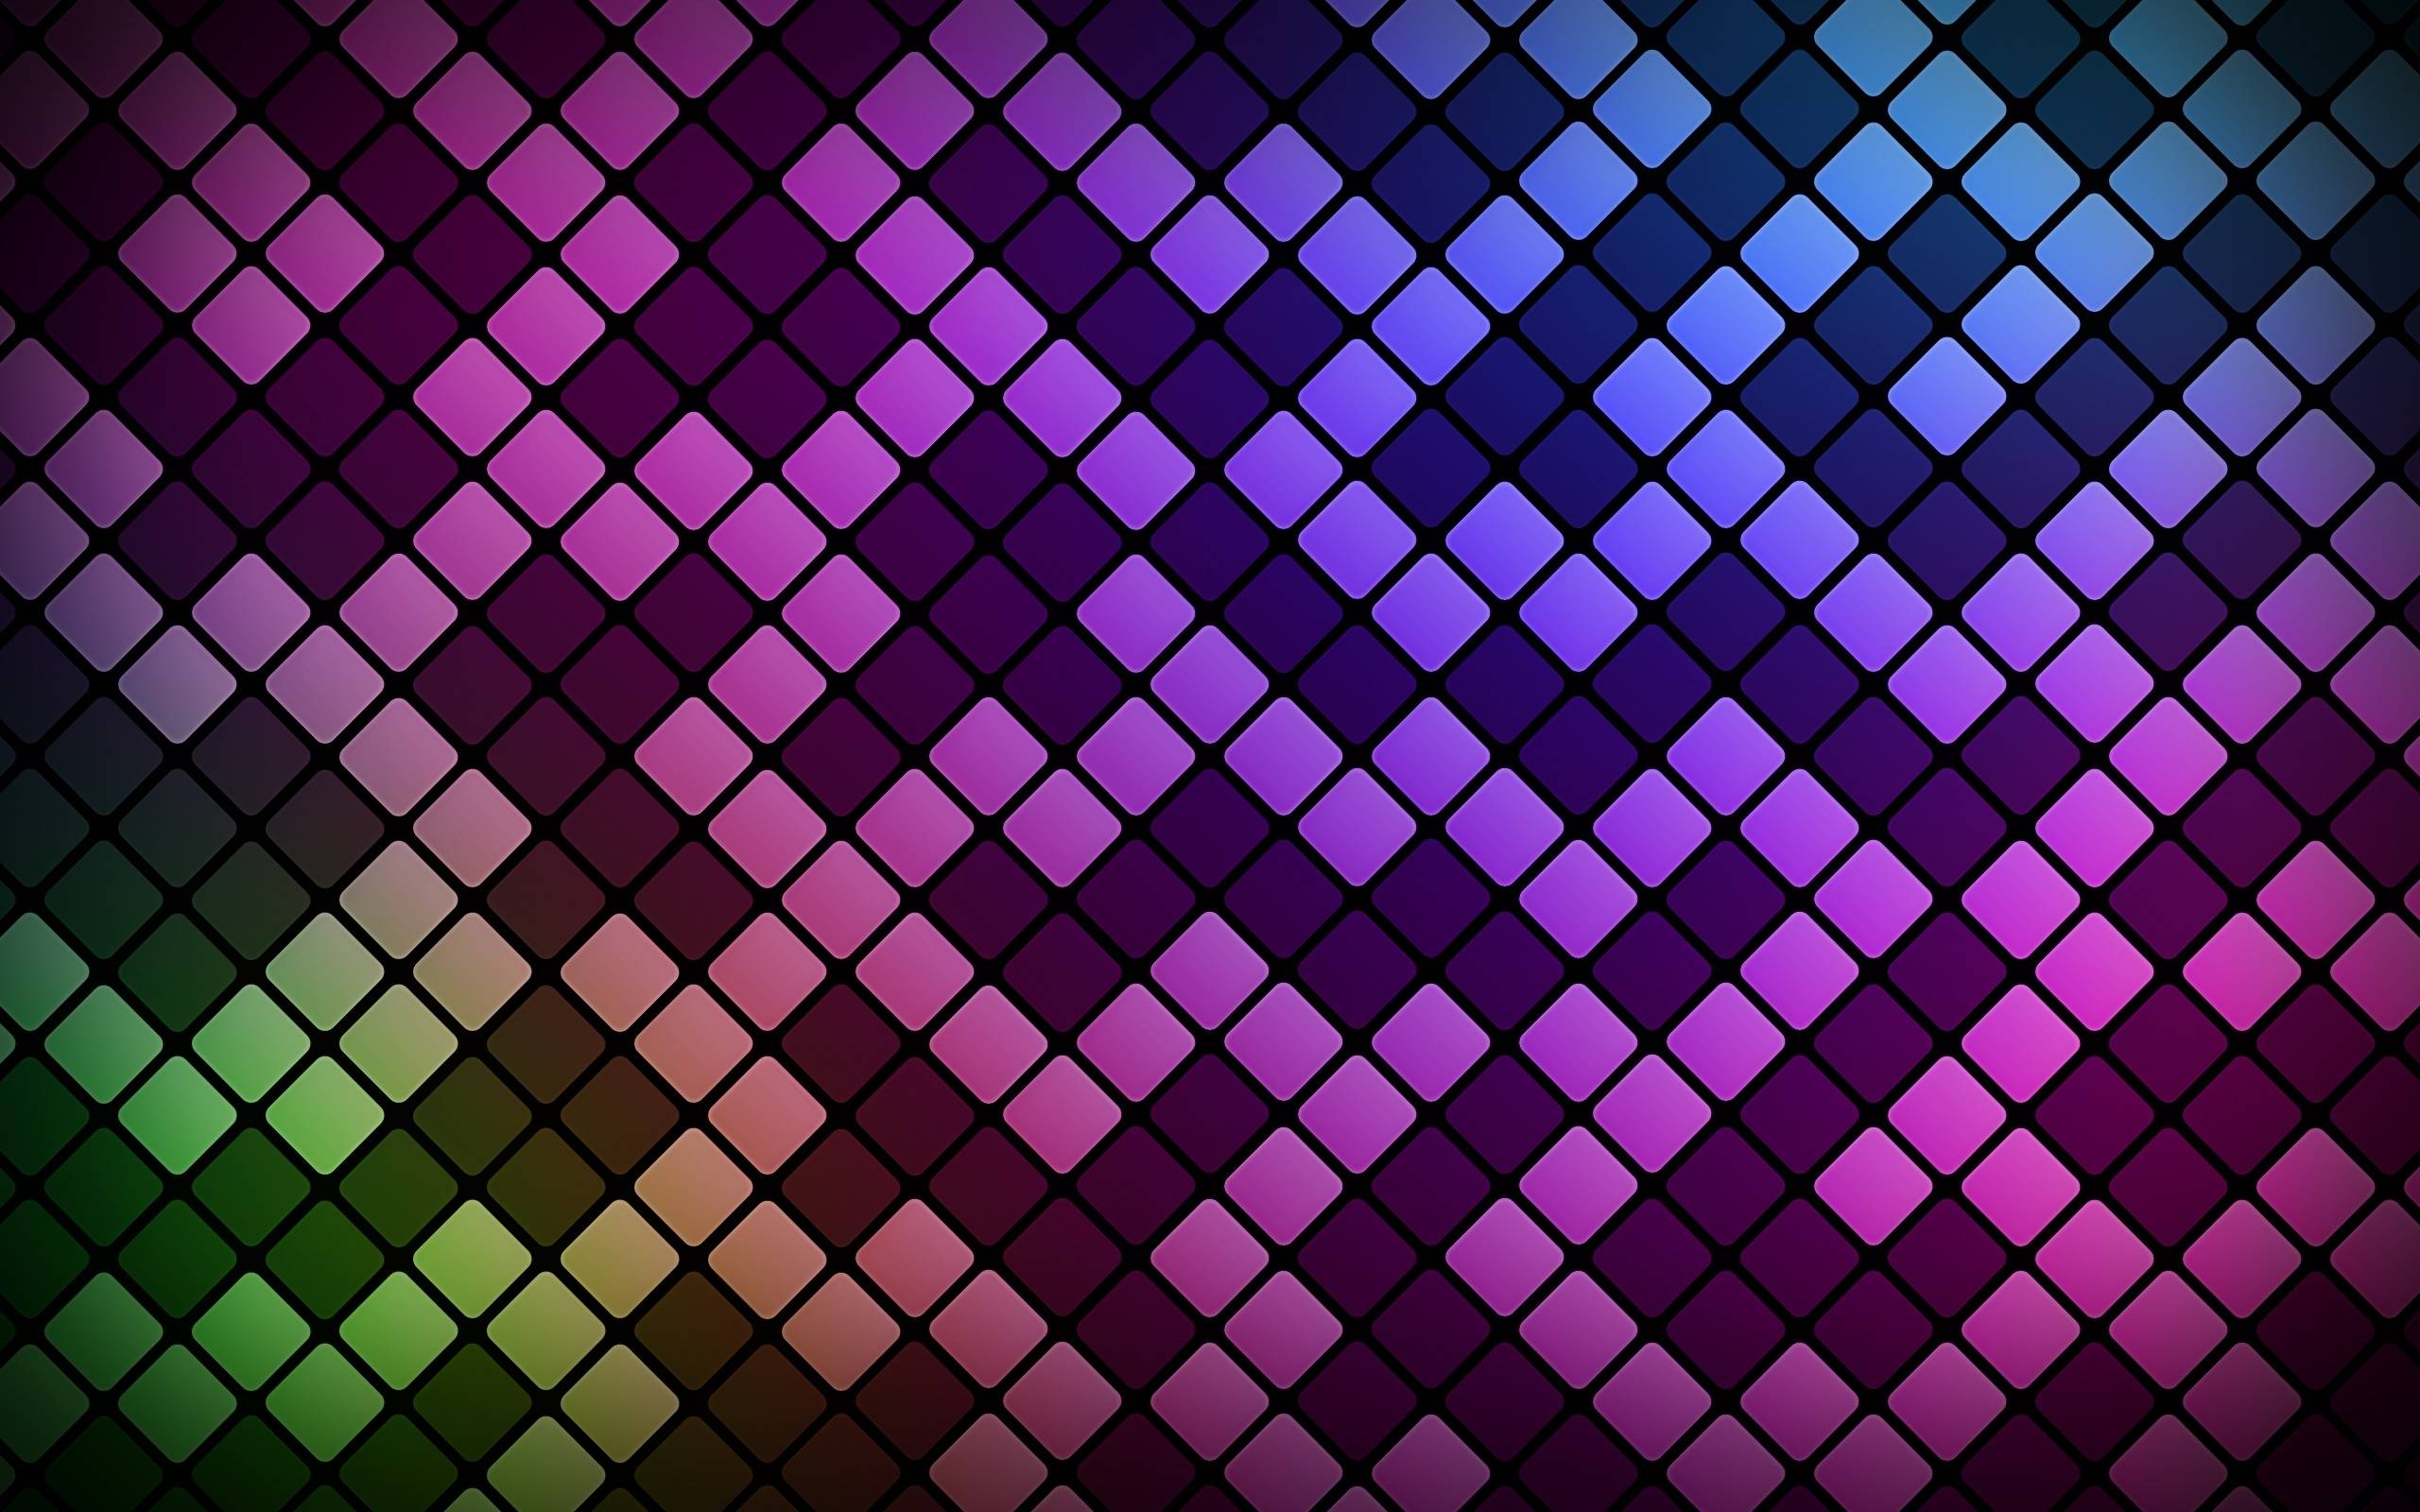 Neon Purple Aesthetic Wallpaper for Desktop